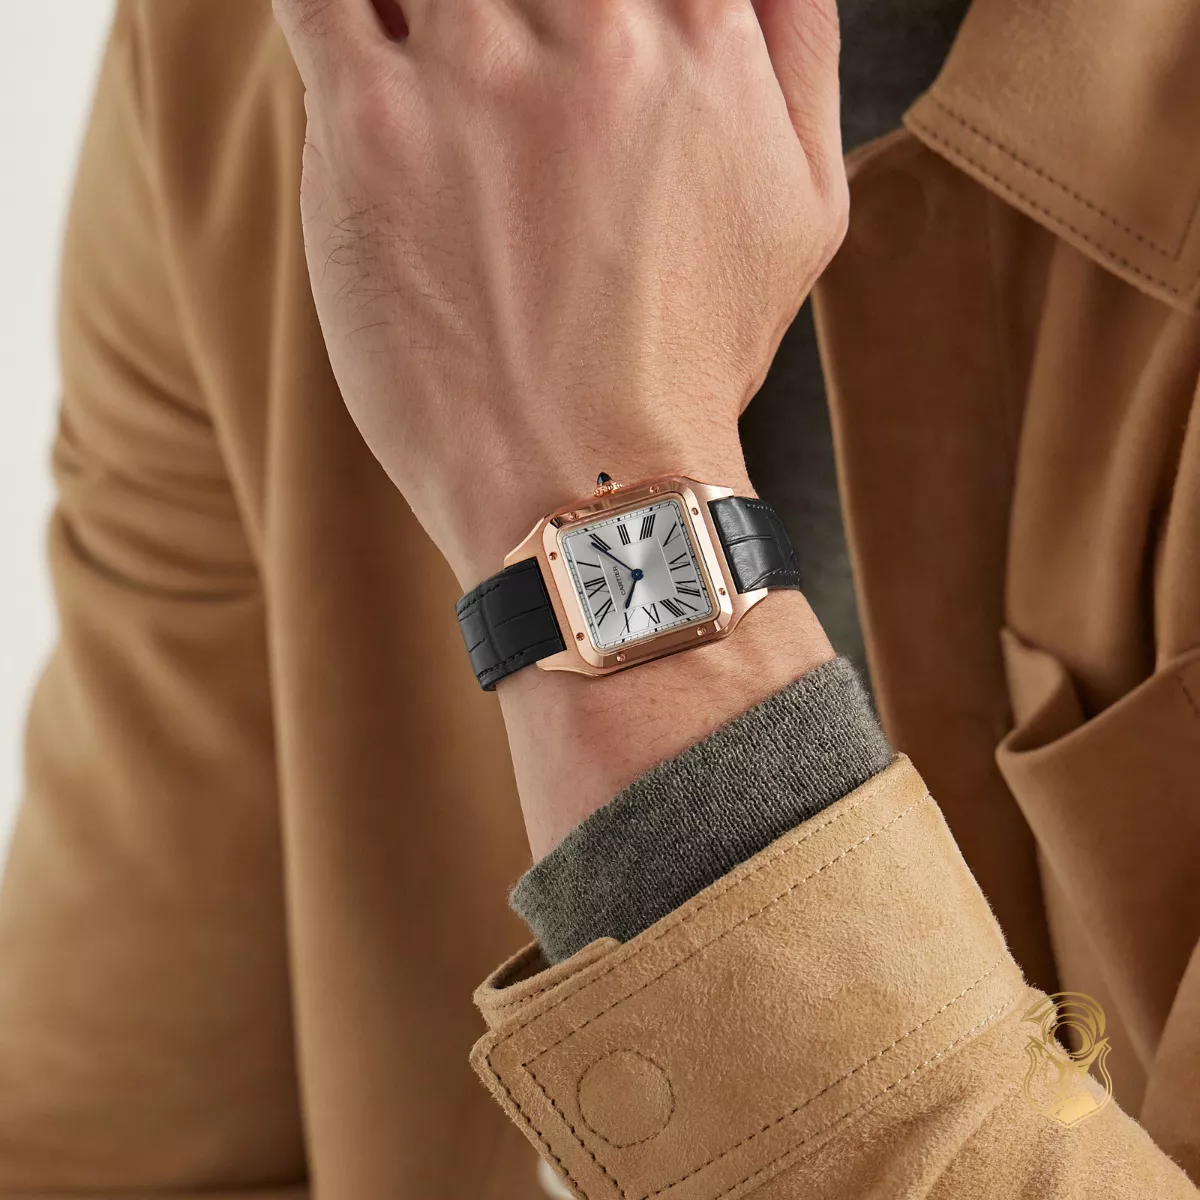 Cartier Santos Dumont WGSA0021 Watch 43.5 x 31.4mm